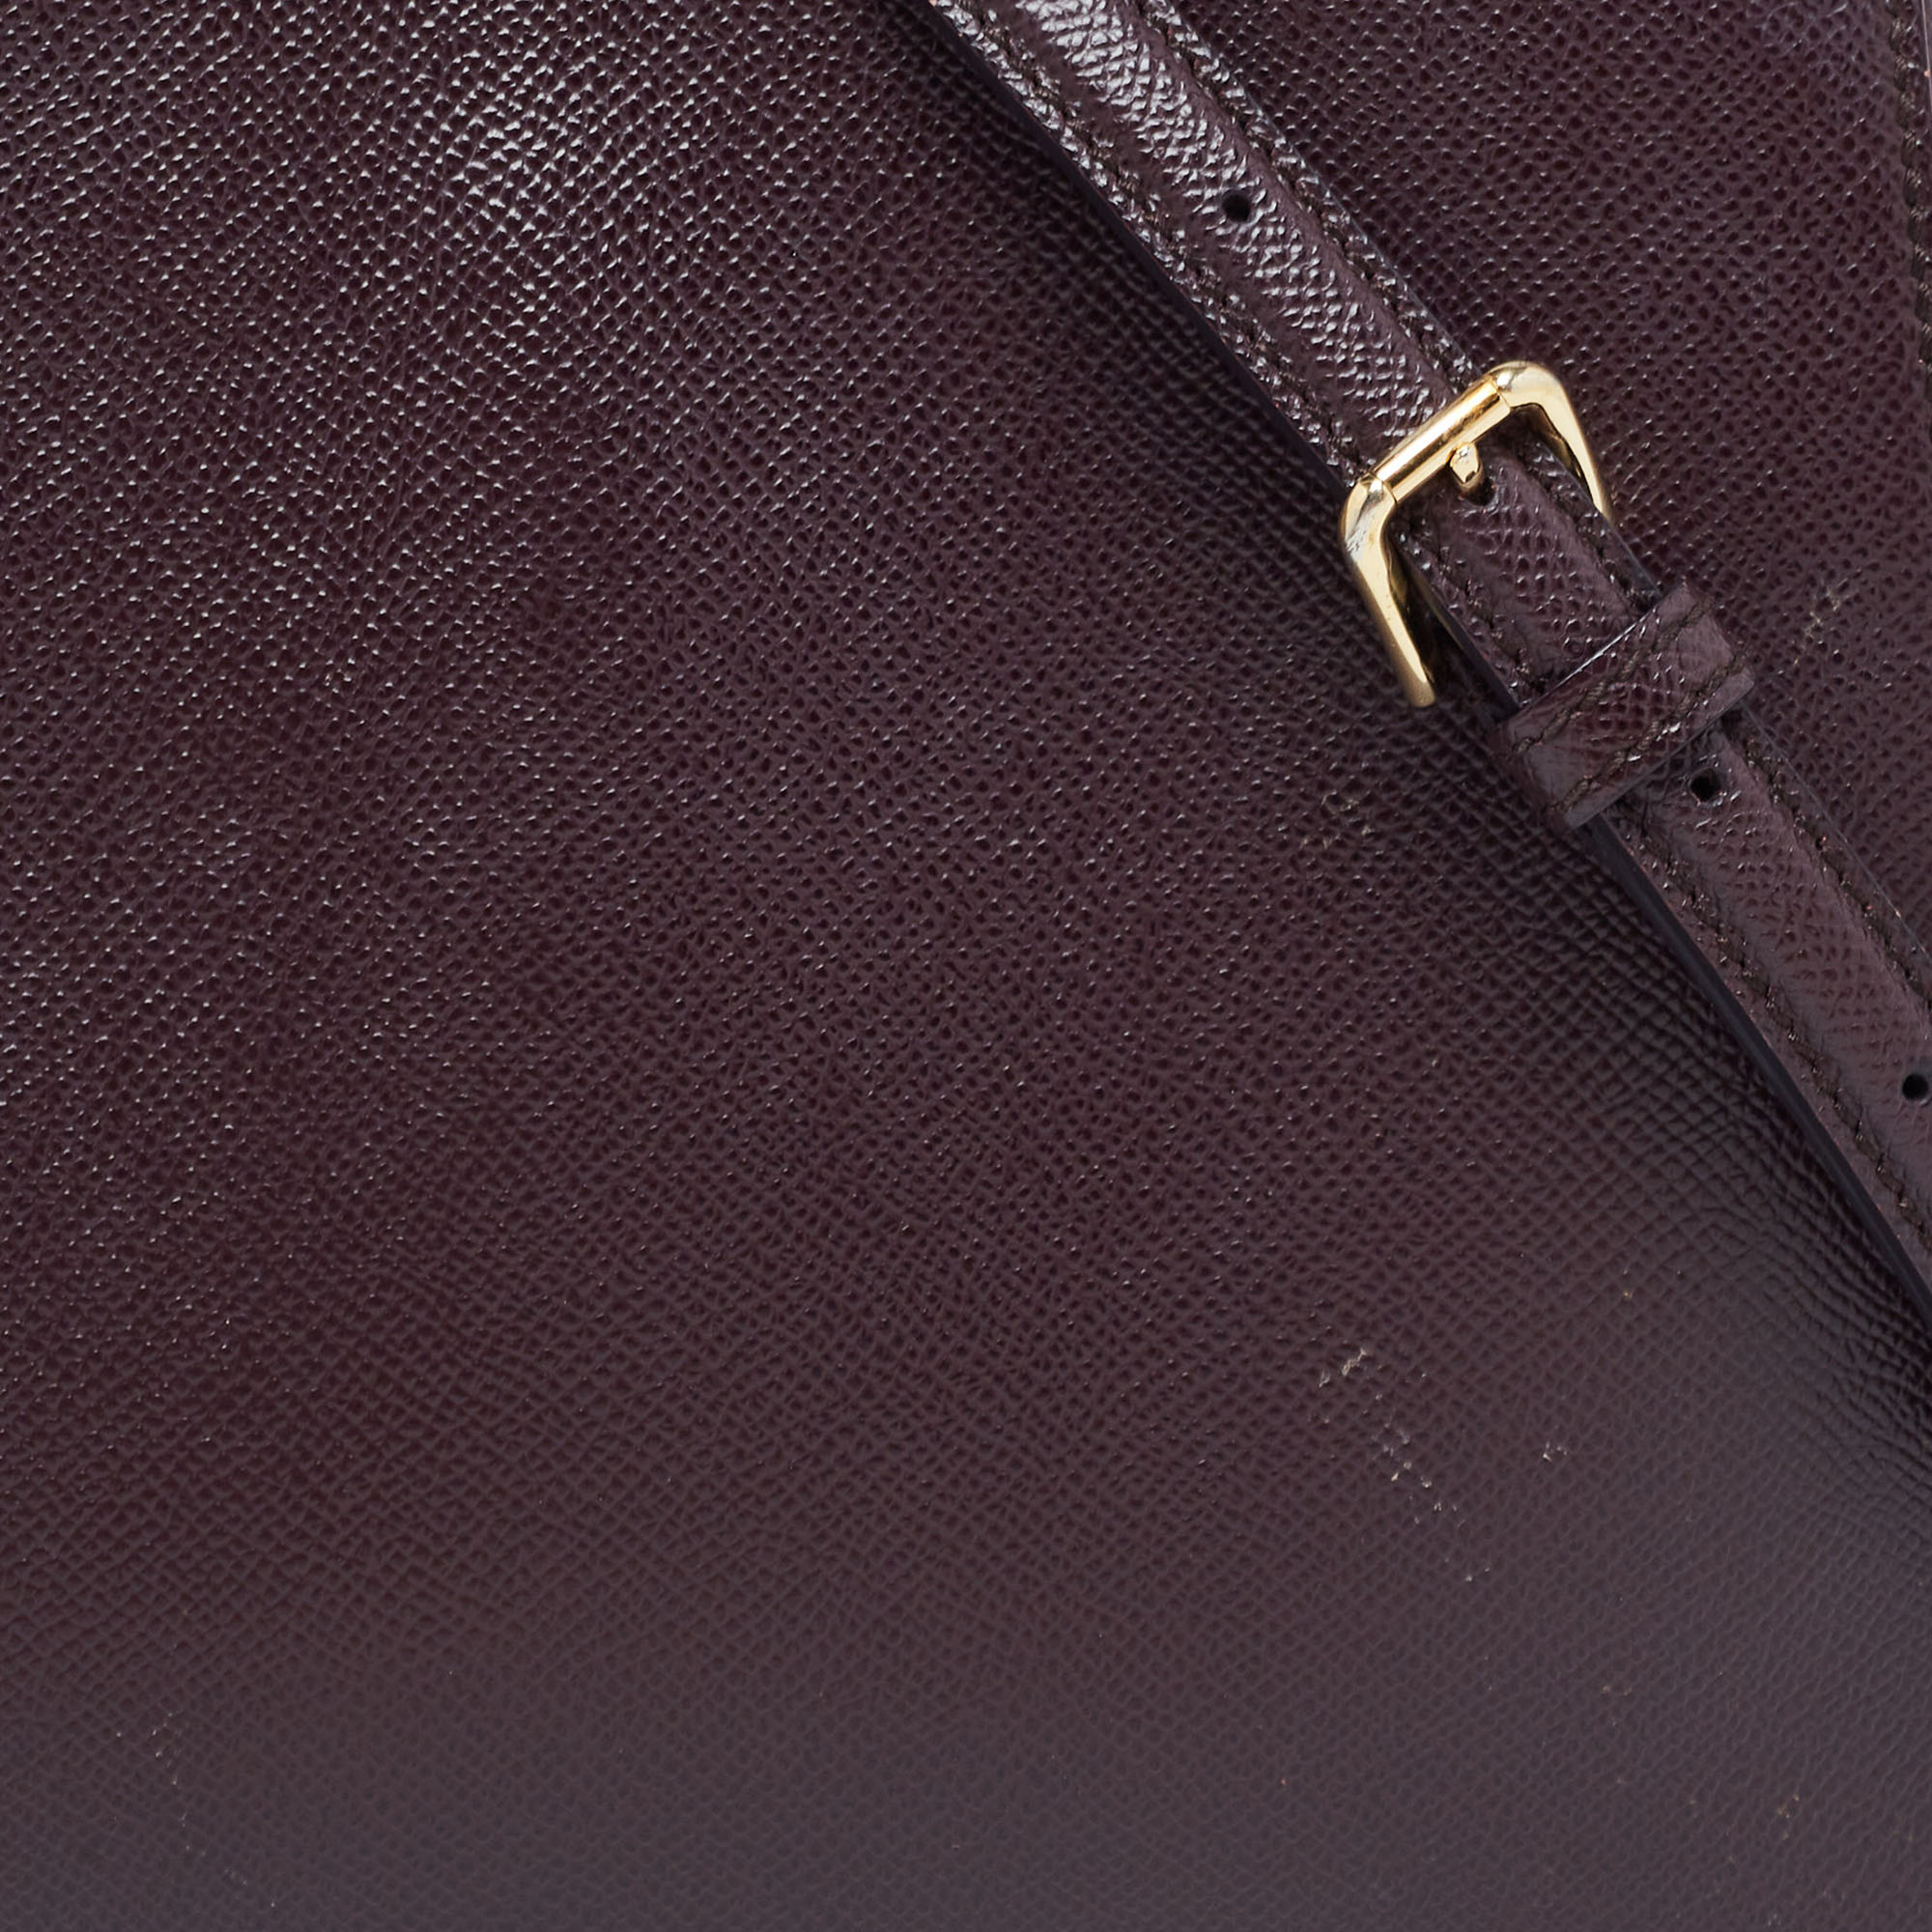 Dolce & Gabbana Burgundy Leather Sicily Top Handle Bag